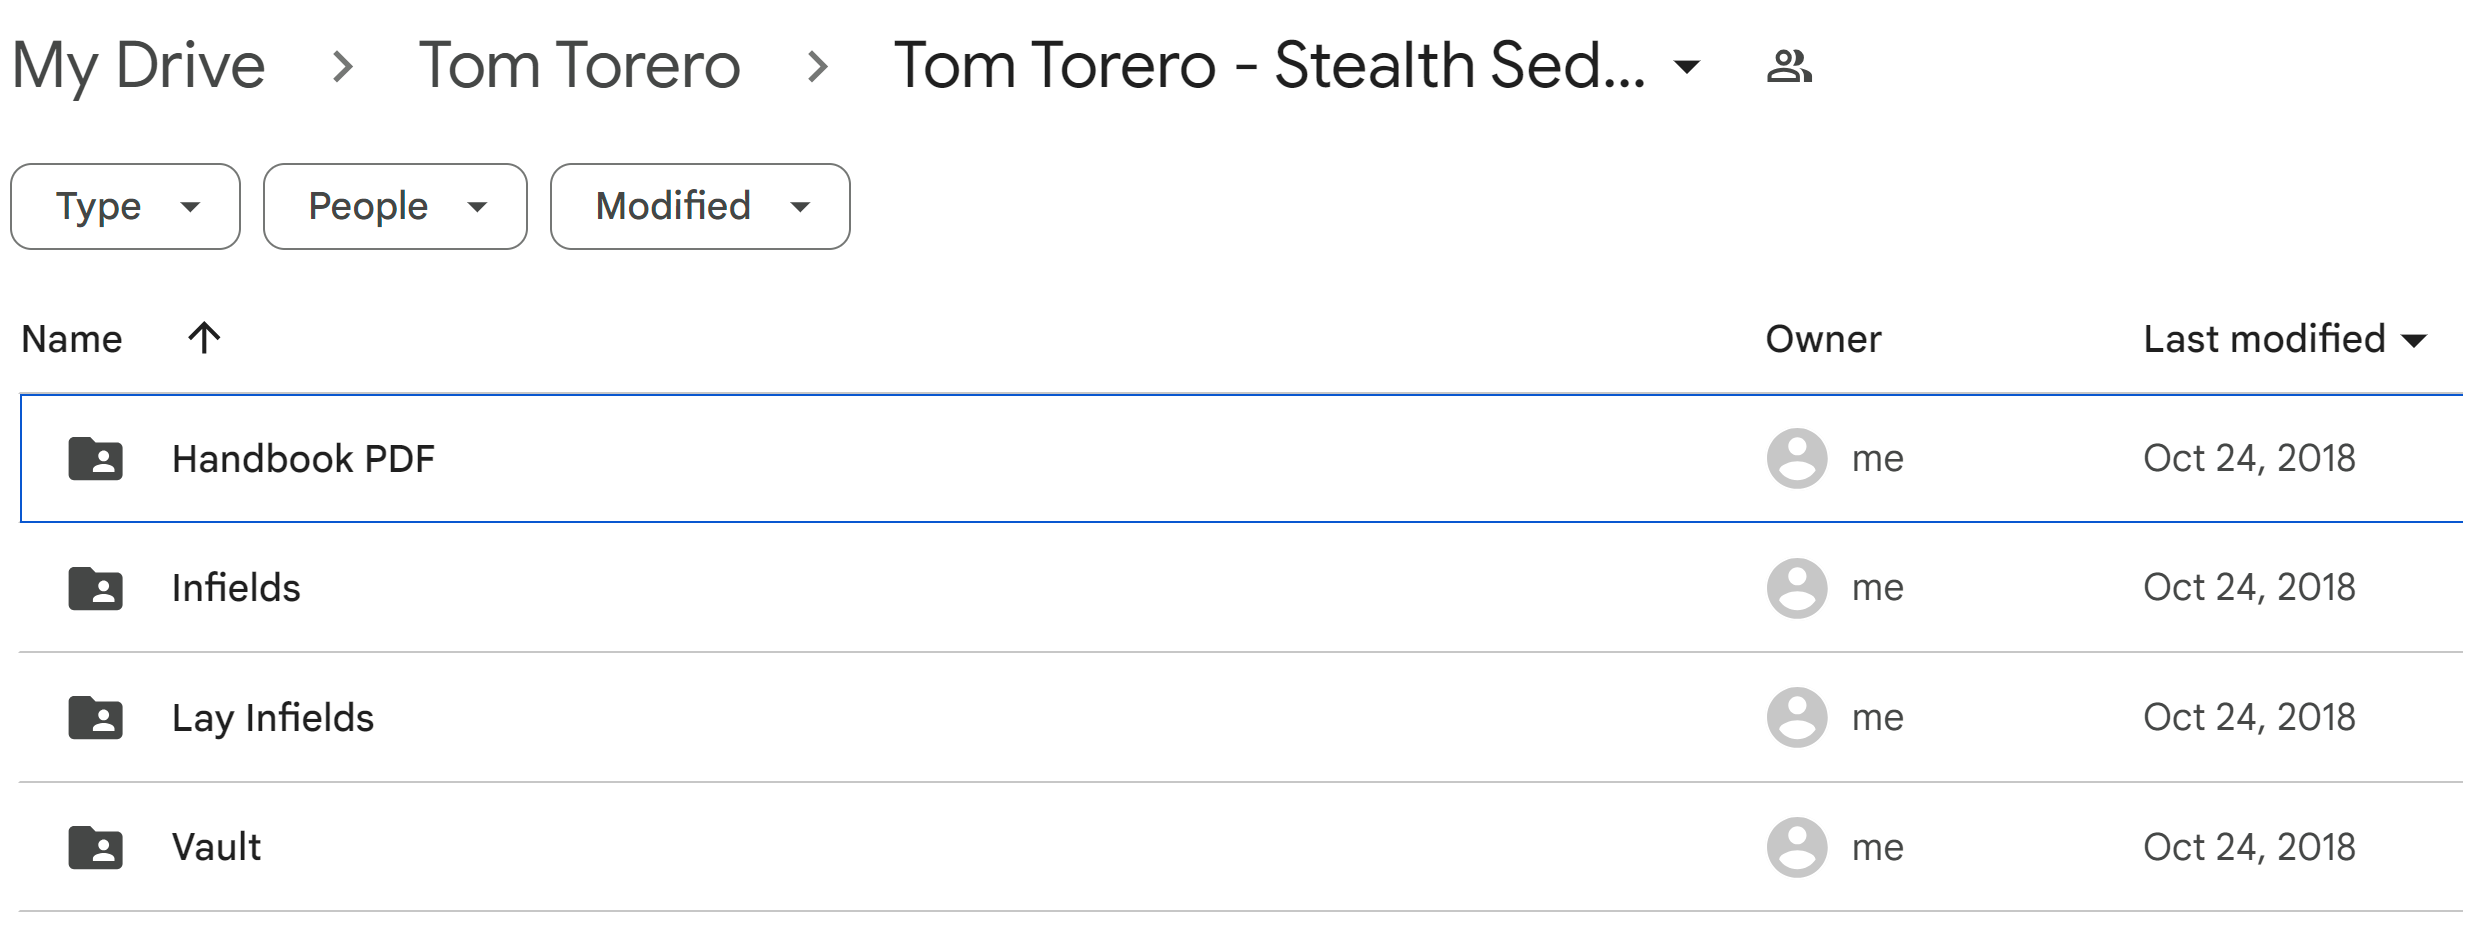 Tom Torero Stealth Seduction Course